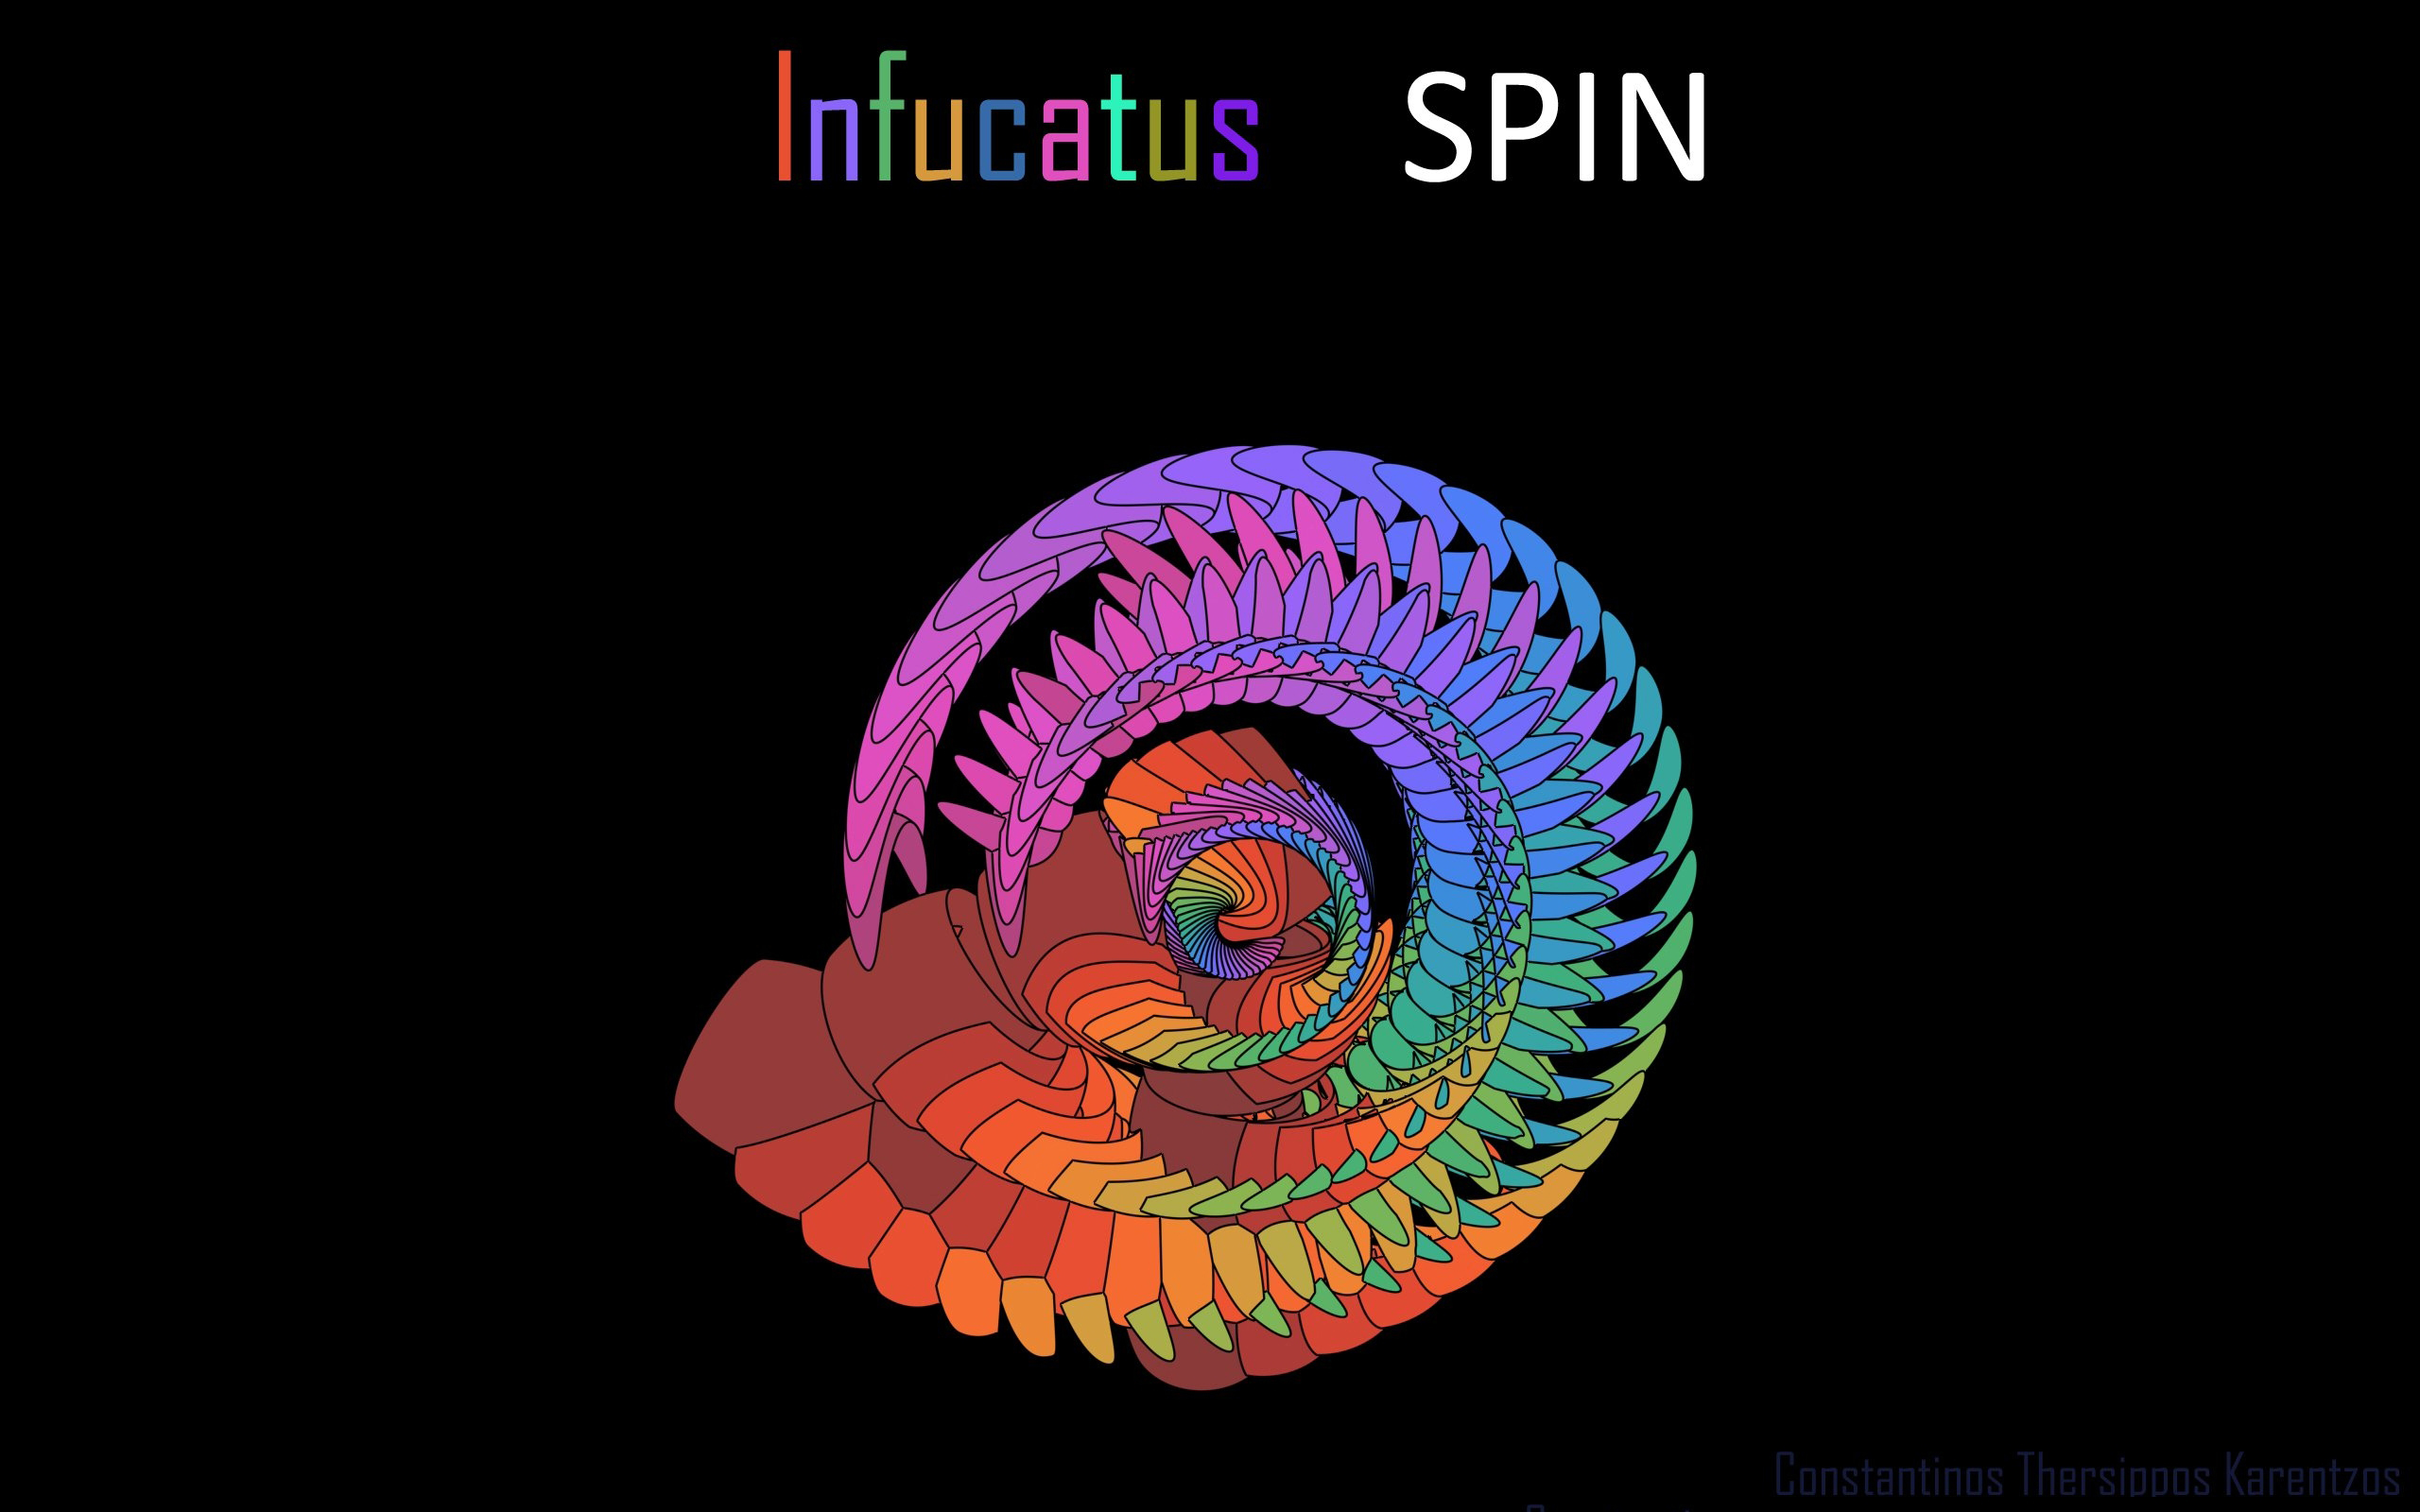 infucatus, Spin Wallpaper